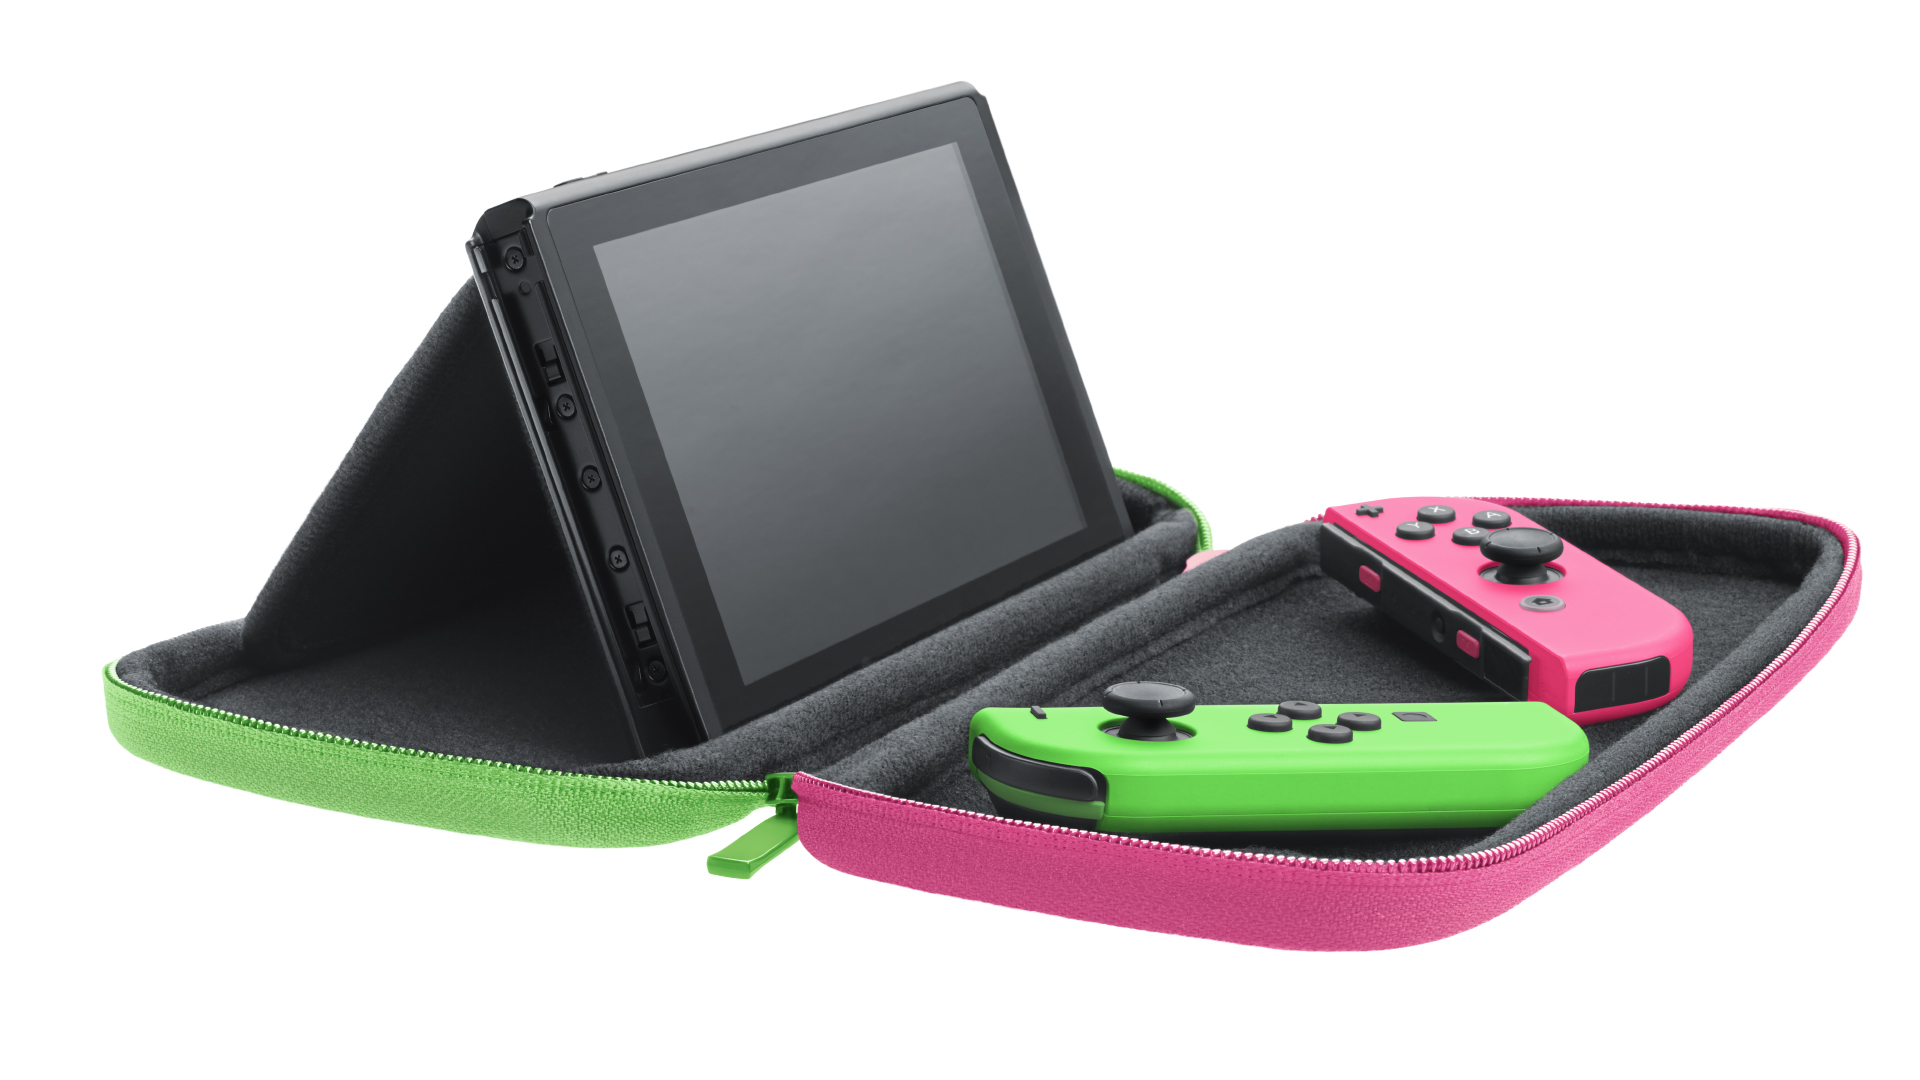 Nintendo Switch Hardware with Splatoon 2 + Neon Green/Neon Pink Joy-Cons (Nintendo Switch) - image 5 of 11